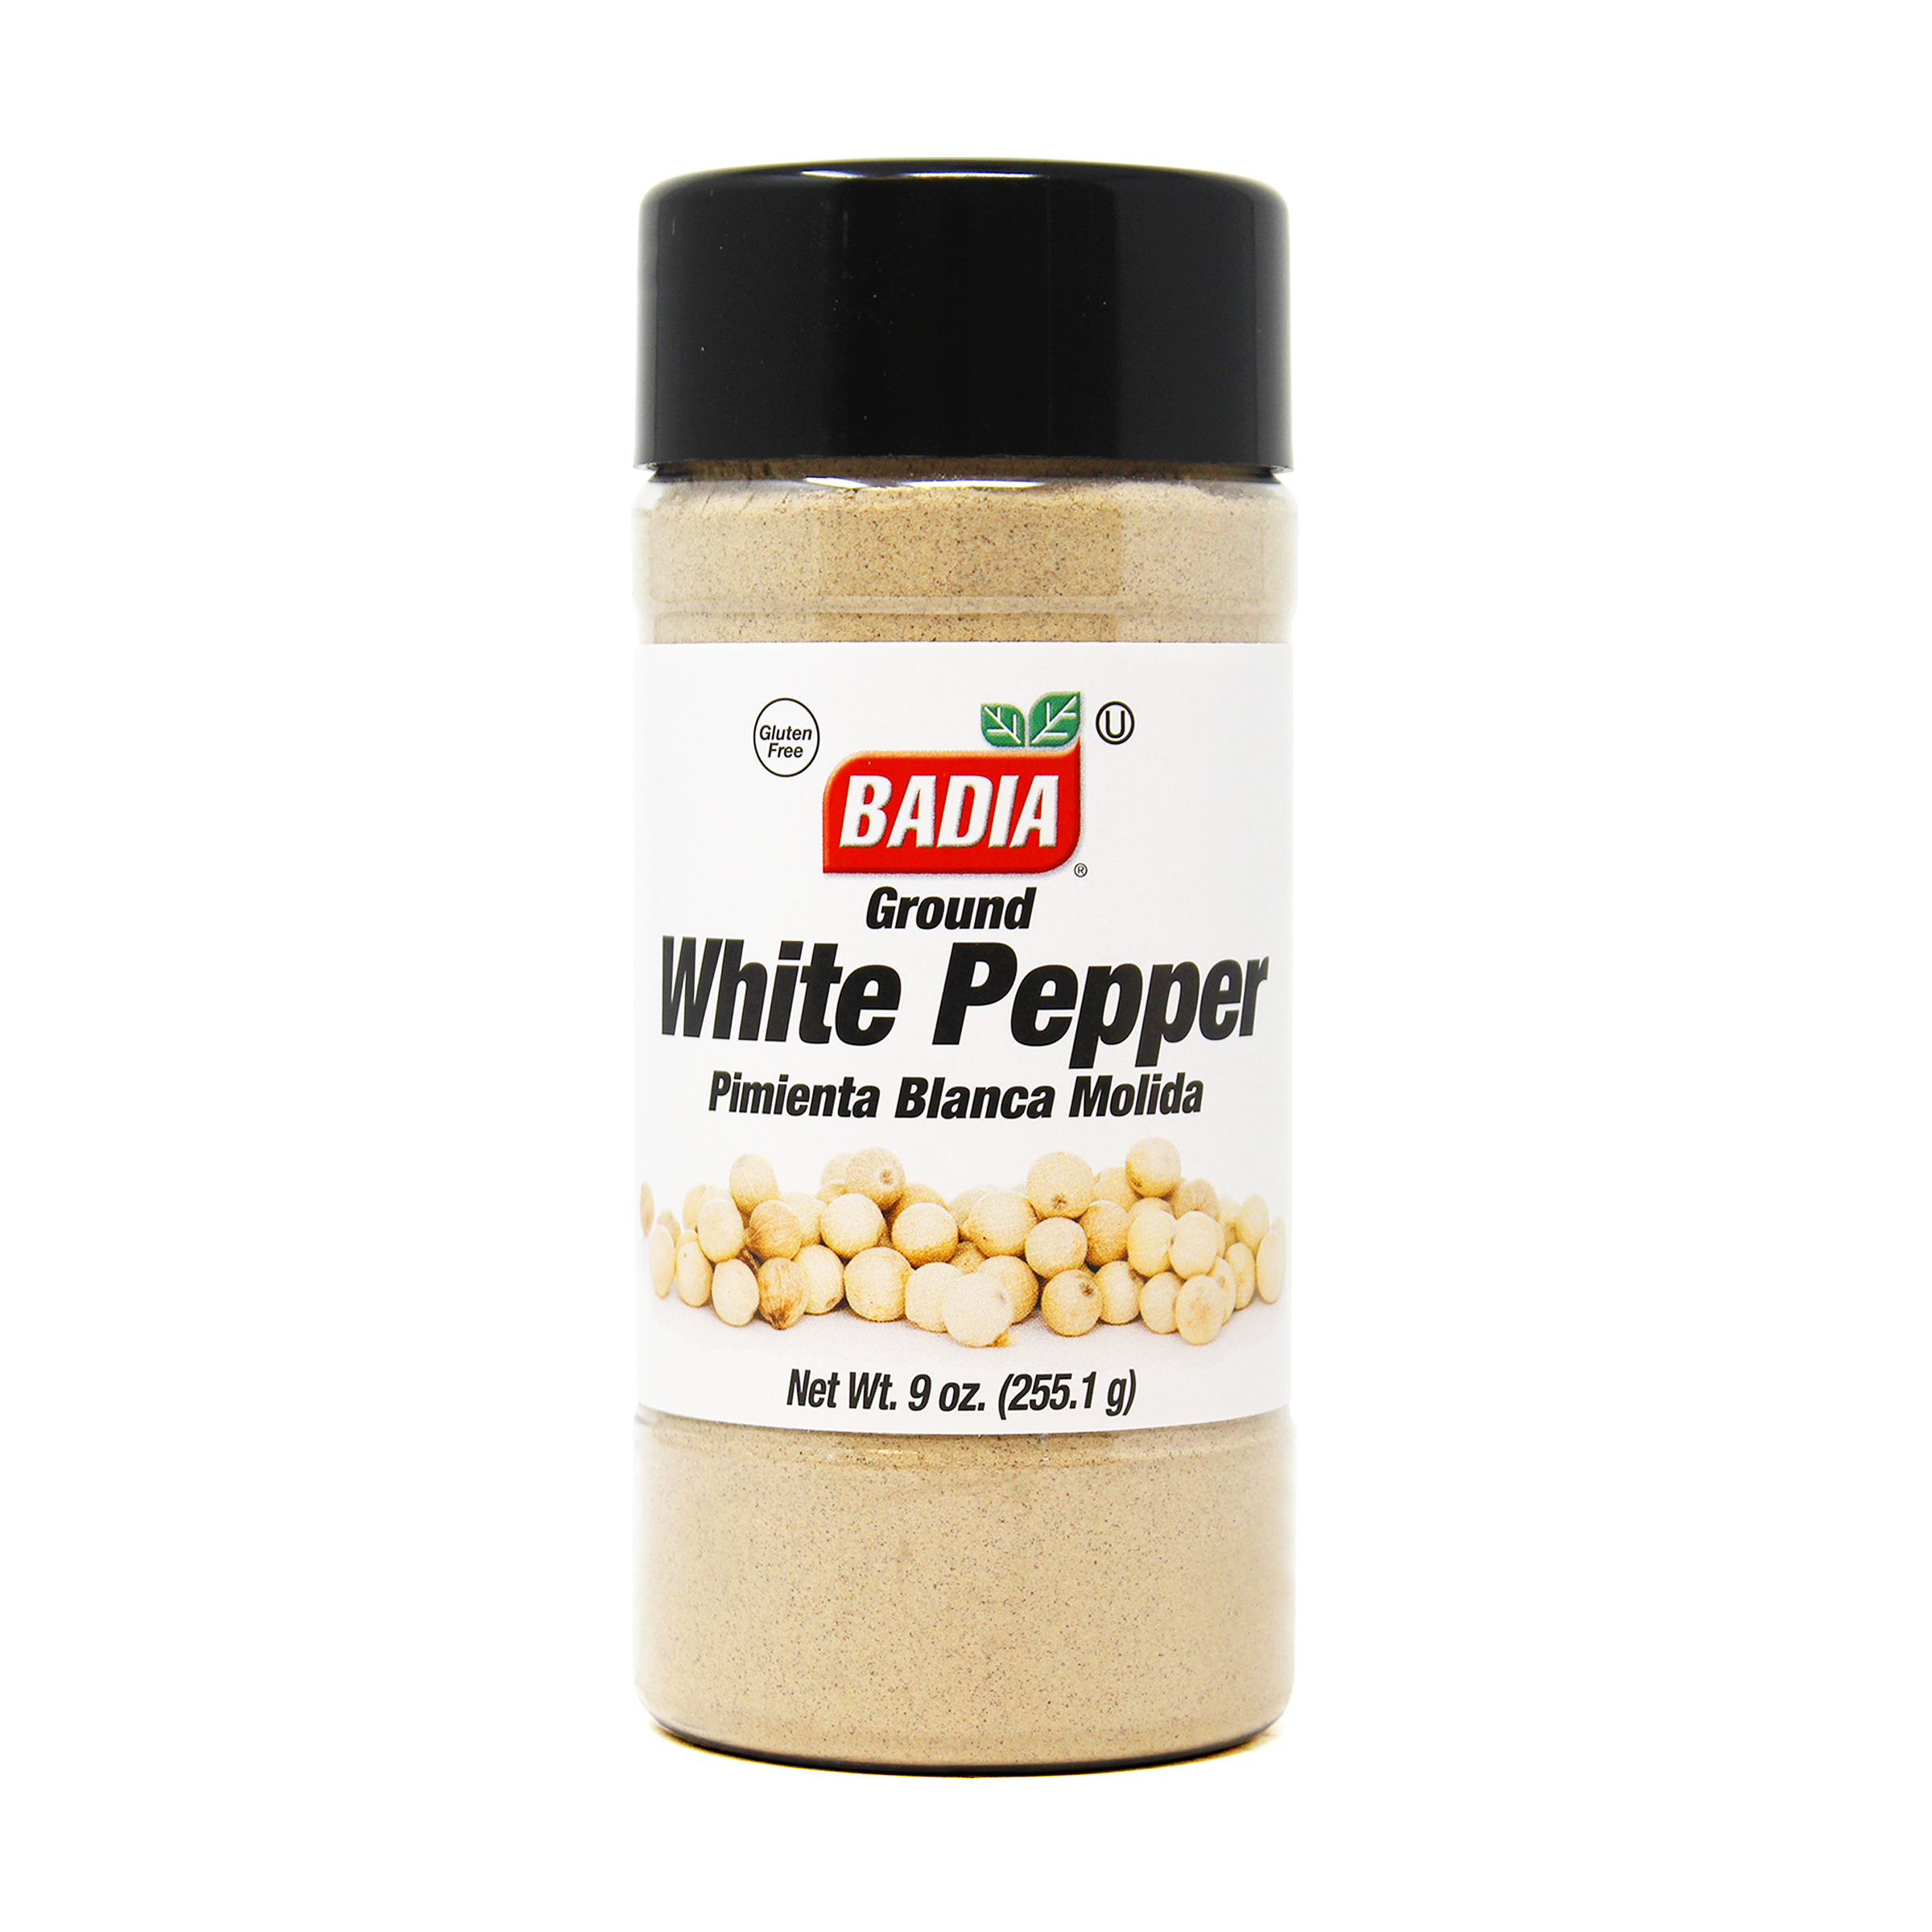 Pepper Black Ground / Pimienta Negra Molida- 3.5 oz - Badia Spices